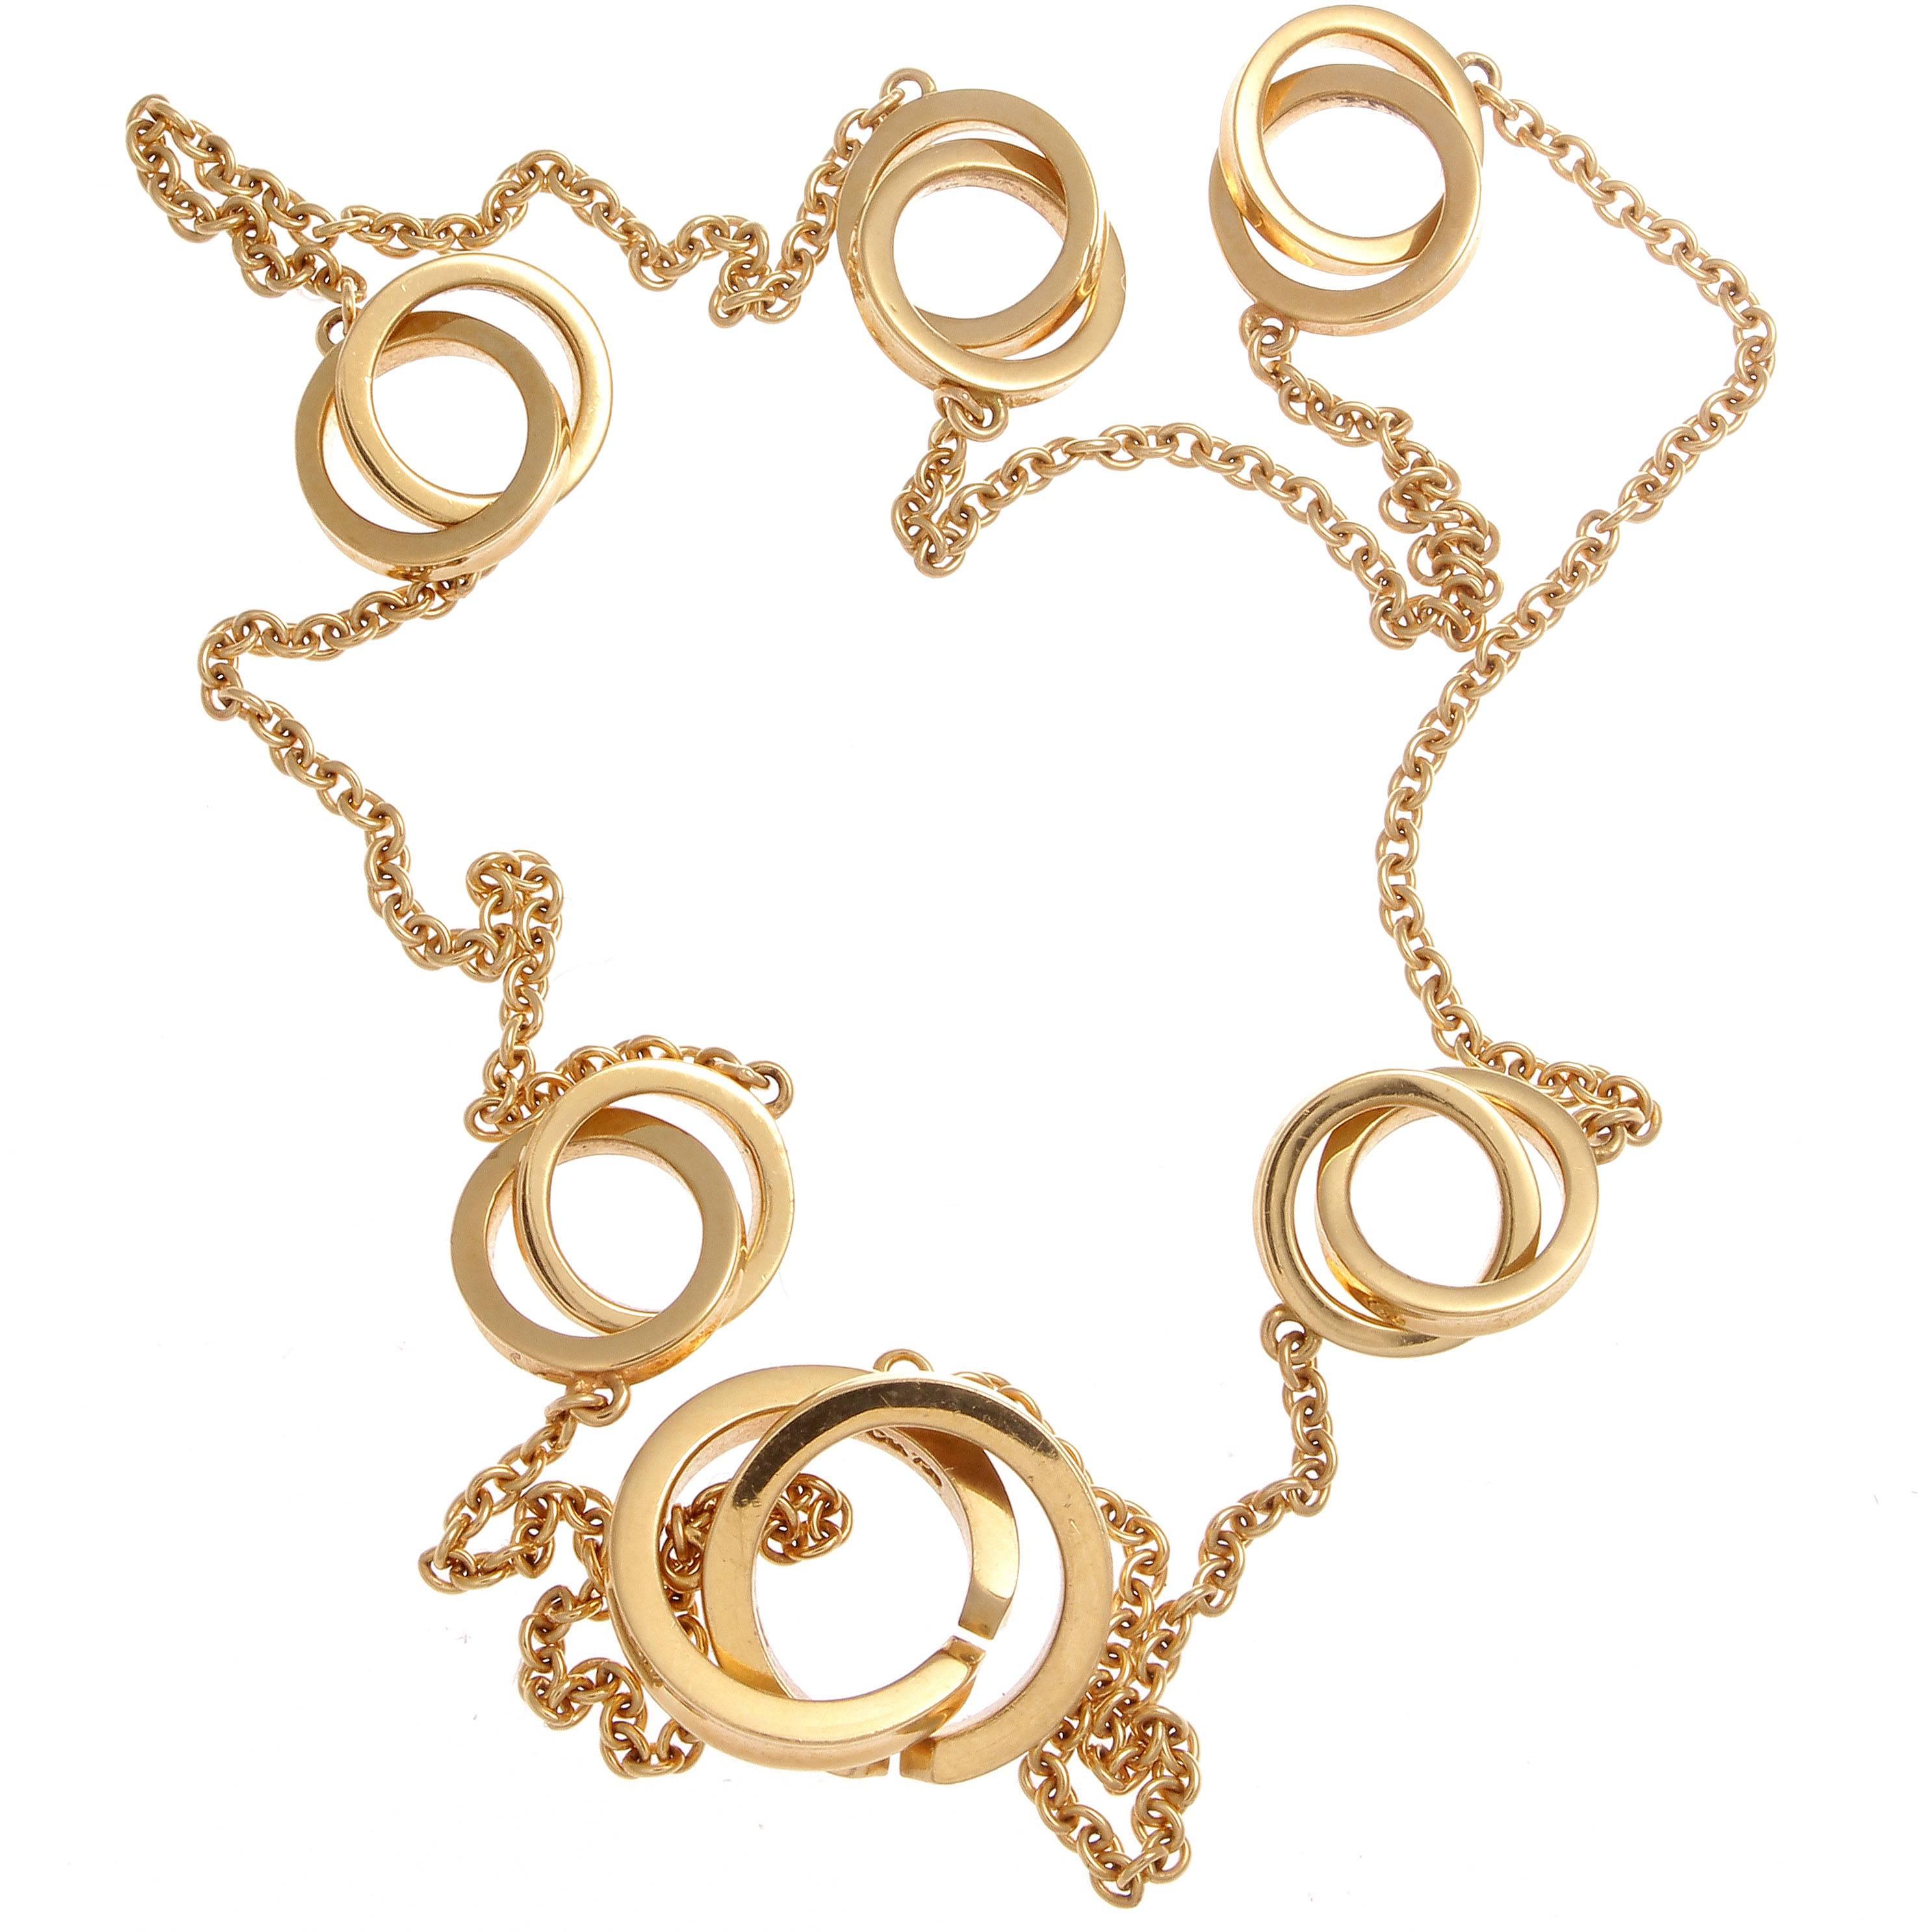 Tiffany & Co. 1837 Gold Interlocking Rings Necklace